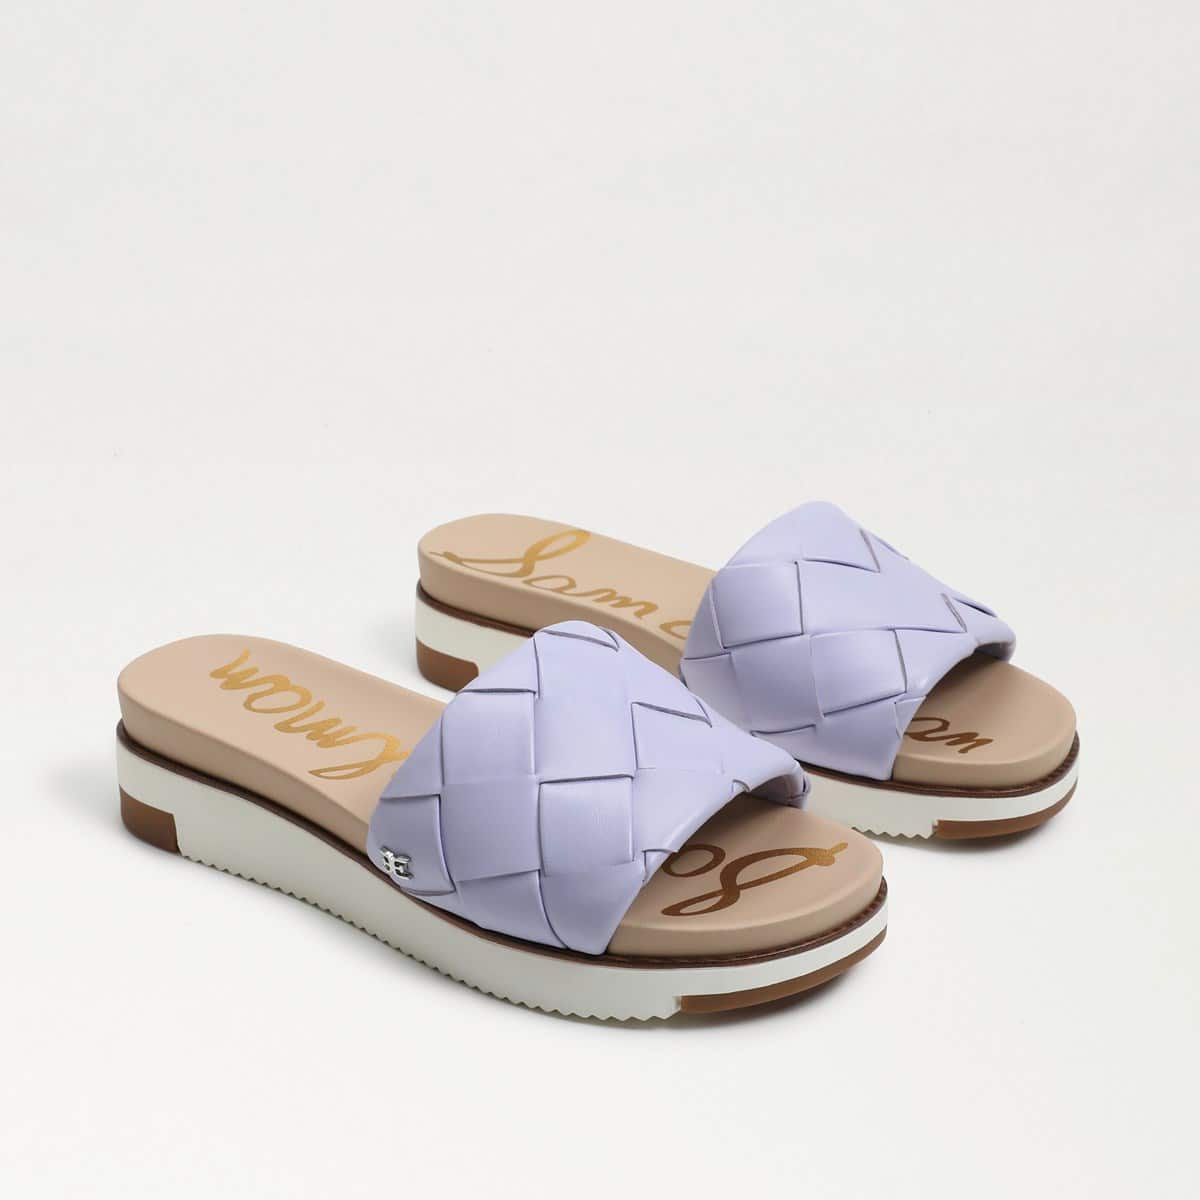 Sam Edelman Adaley Woven Slide Sandal Misty Lilac Leather ublU41